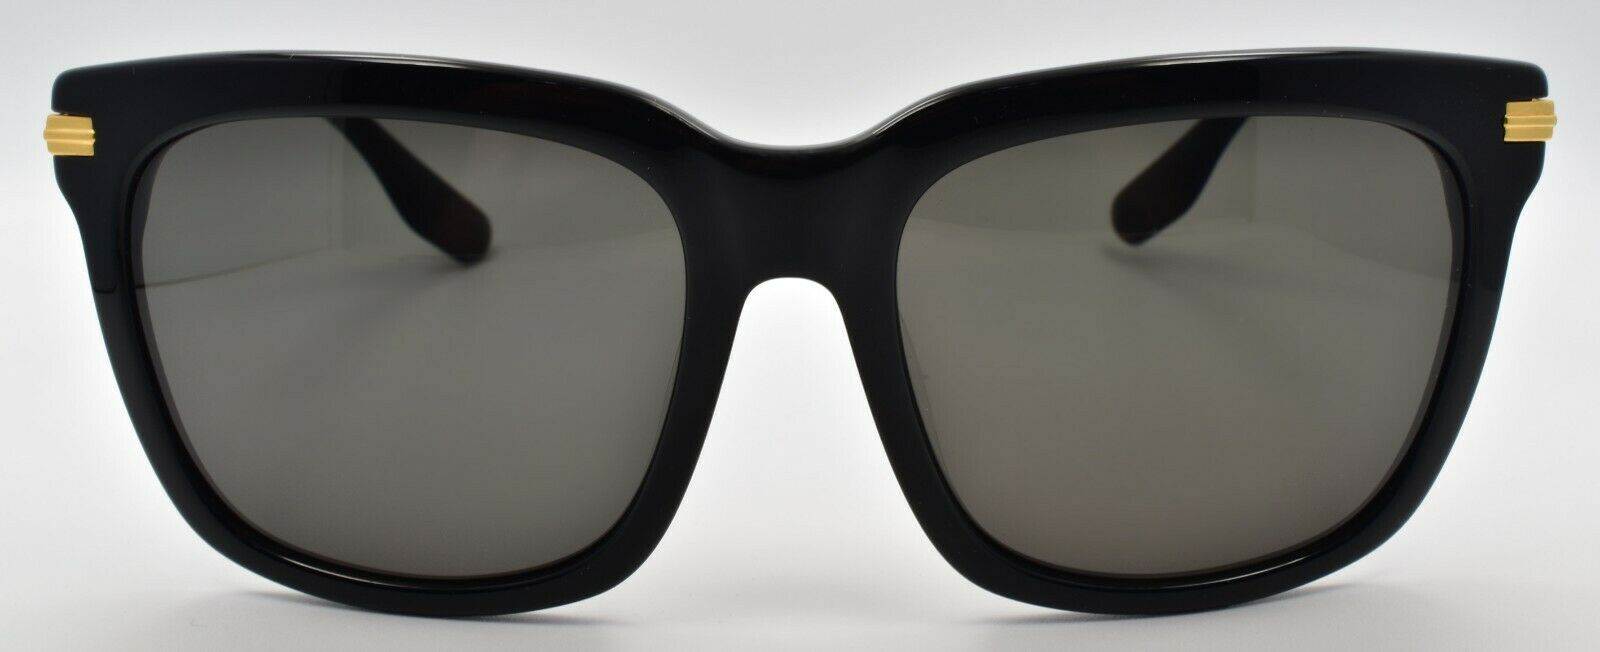 2-McQ Alexander McQueen MQ0055SK 001 Unisex Sunglasses Black & Gold / Smoke-889652037295-IKSpecs